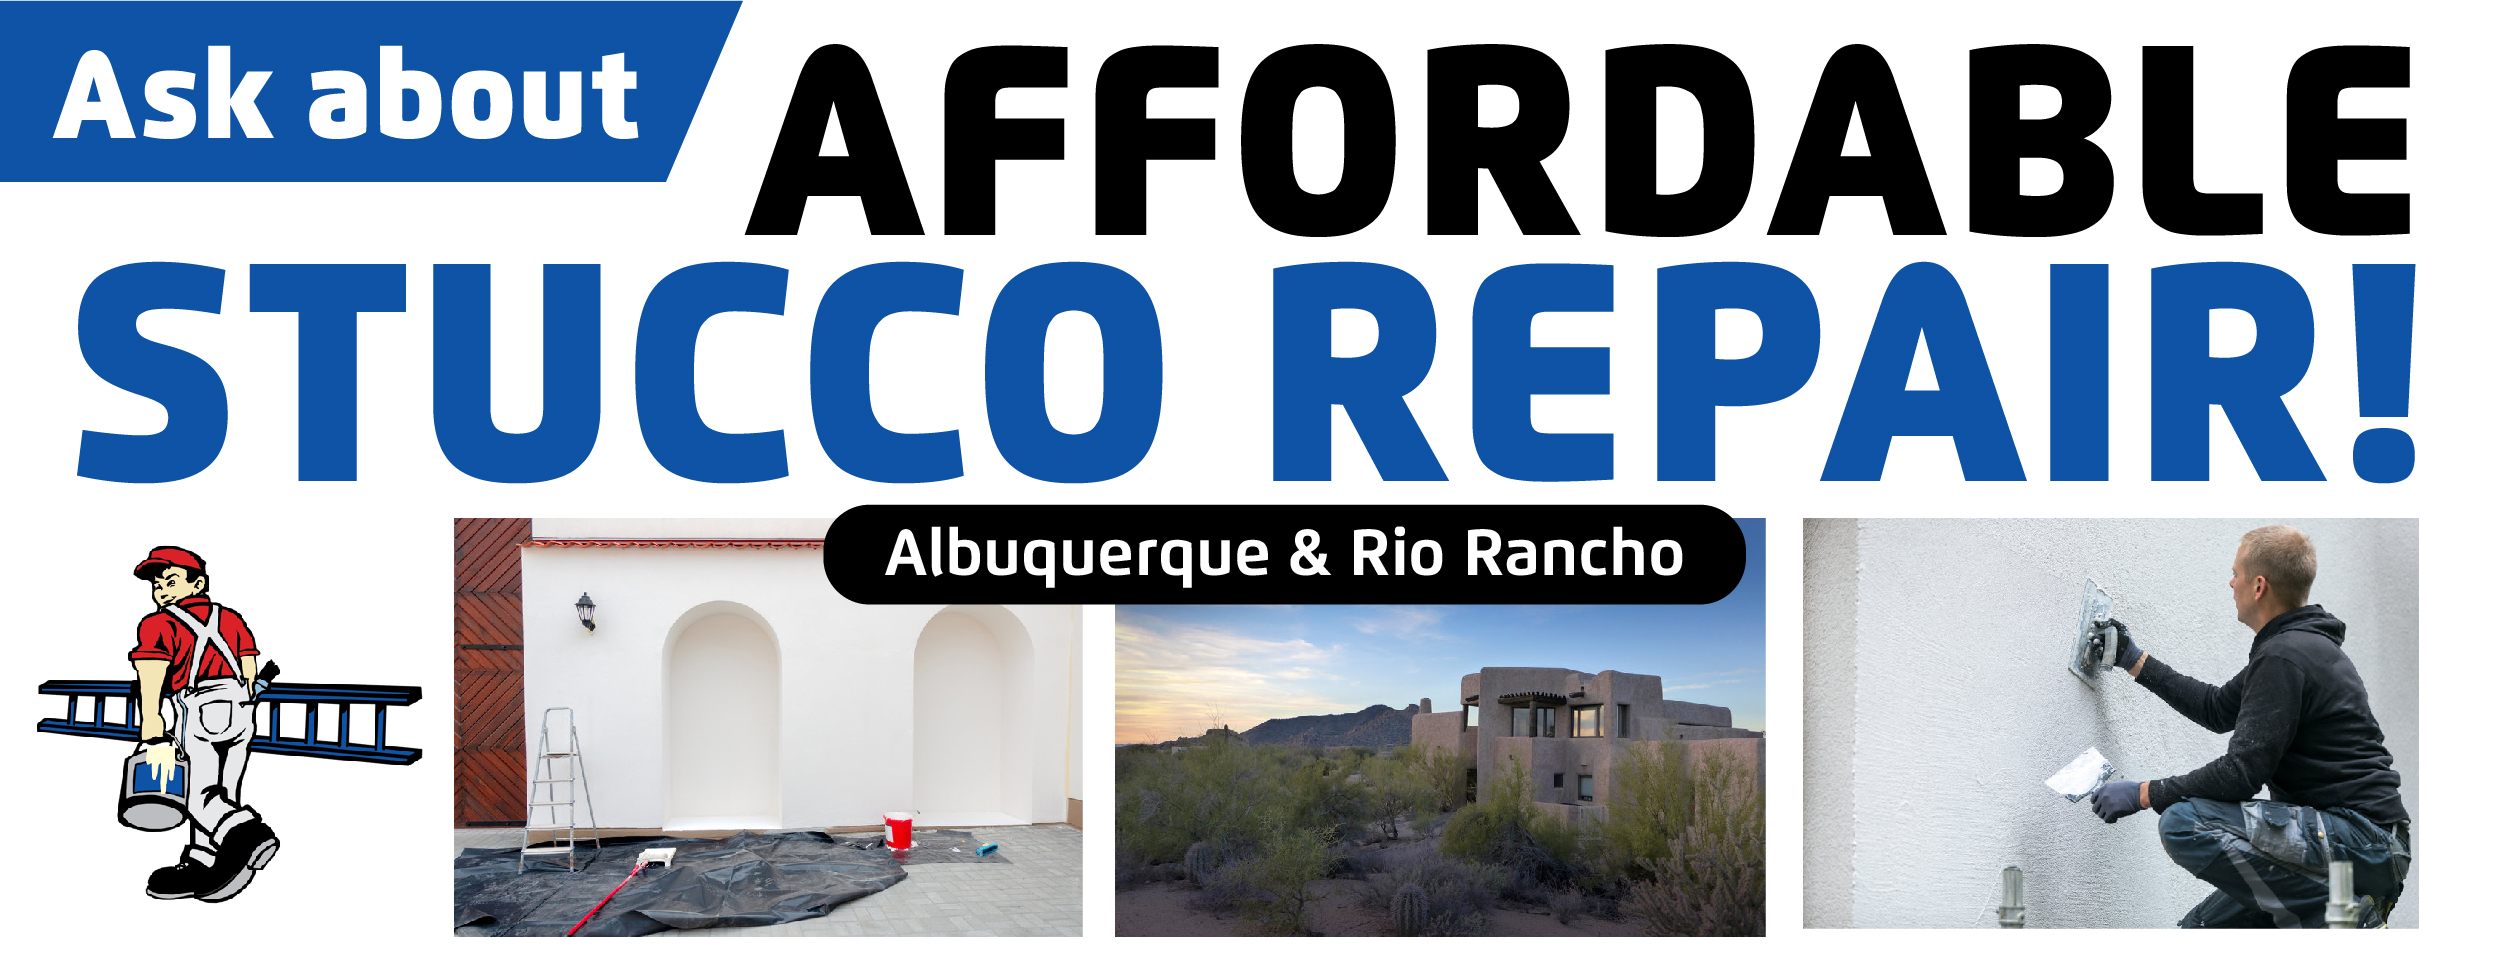 affordable stucco repair near me Rio Rancho NM